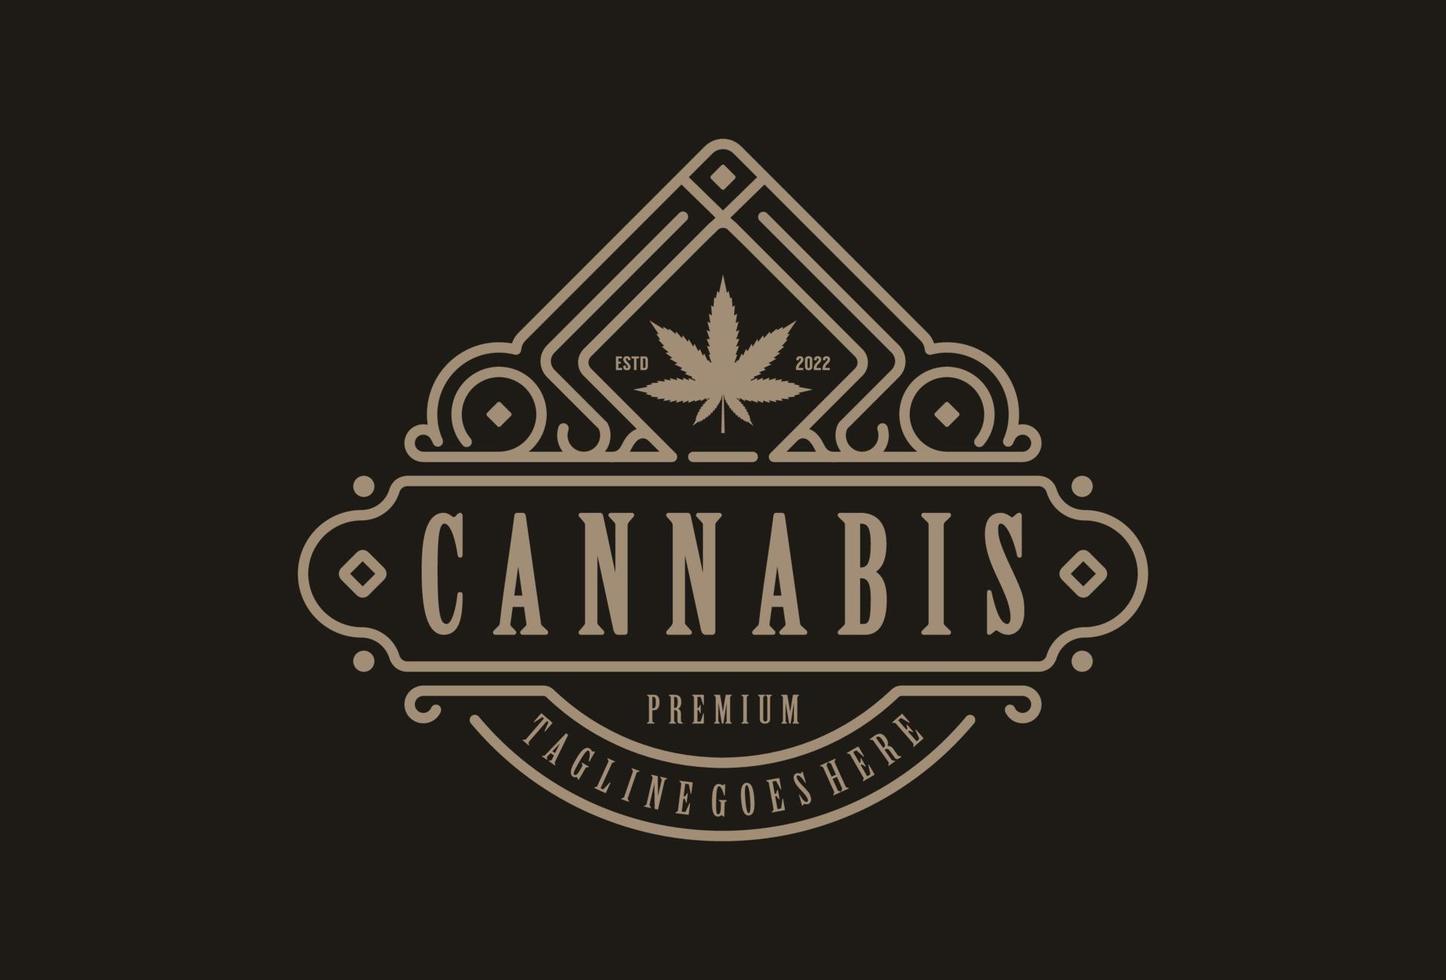 Vintage retro cbd cannabis marijuana hemp leaf farm cultivation logo design vector